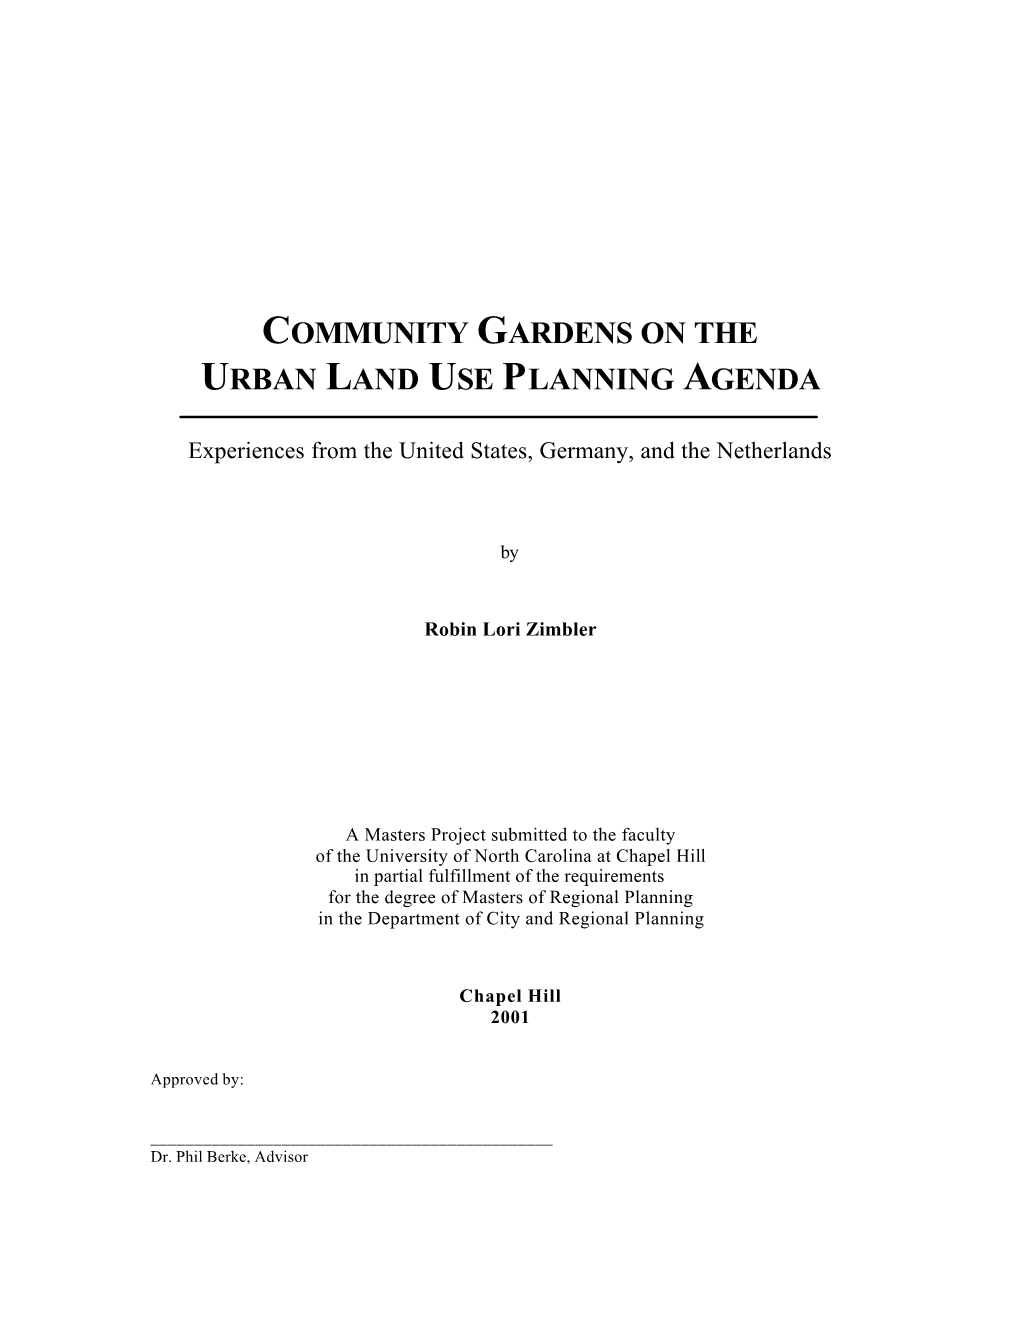 Community Gardens on the Urban Land Use Planning Agenda